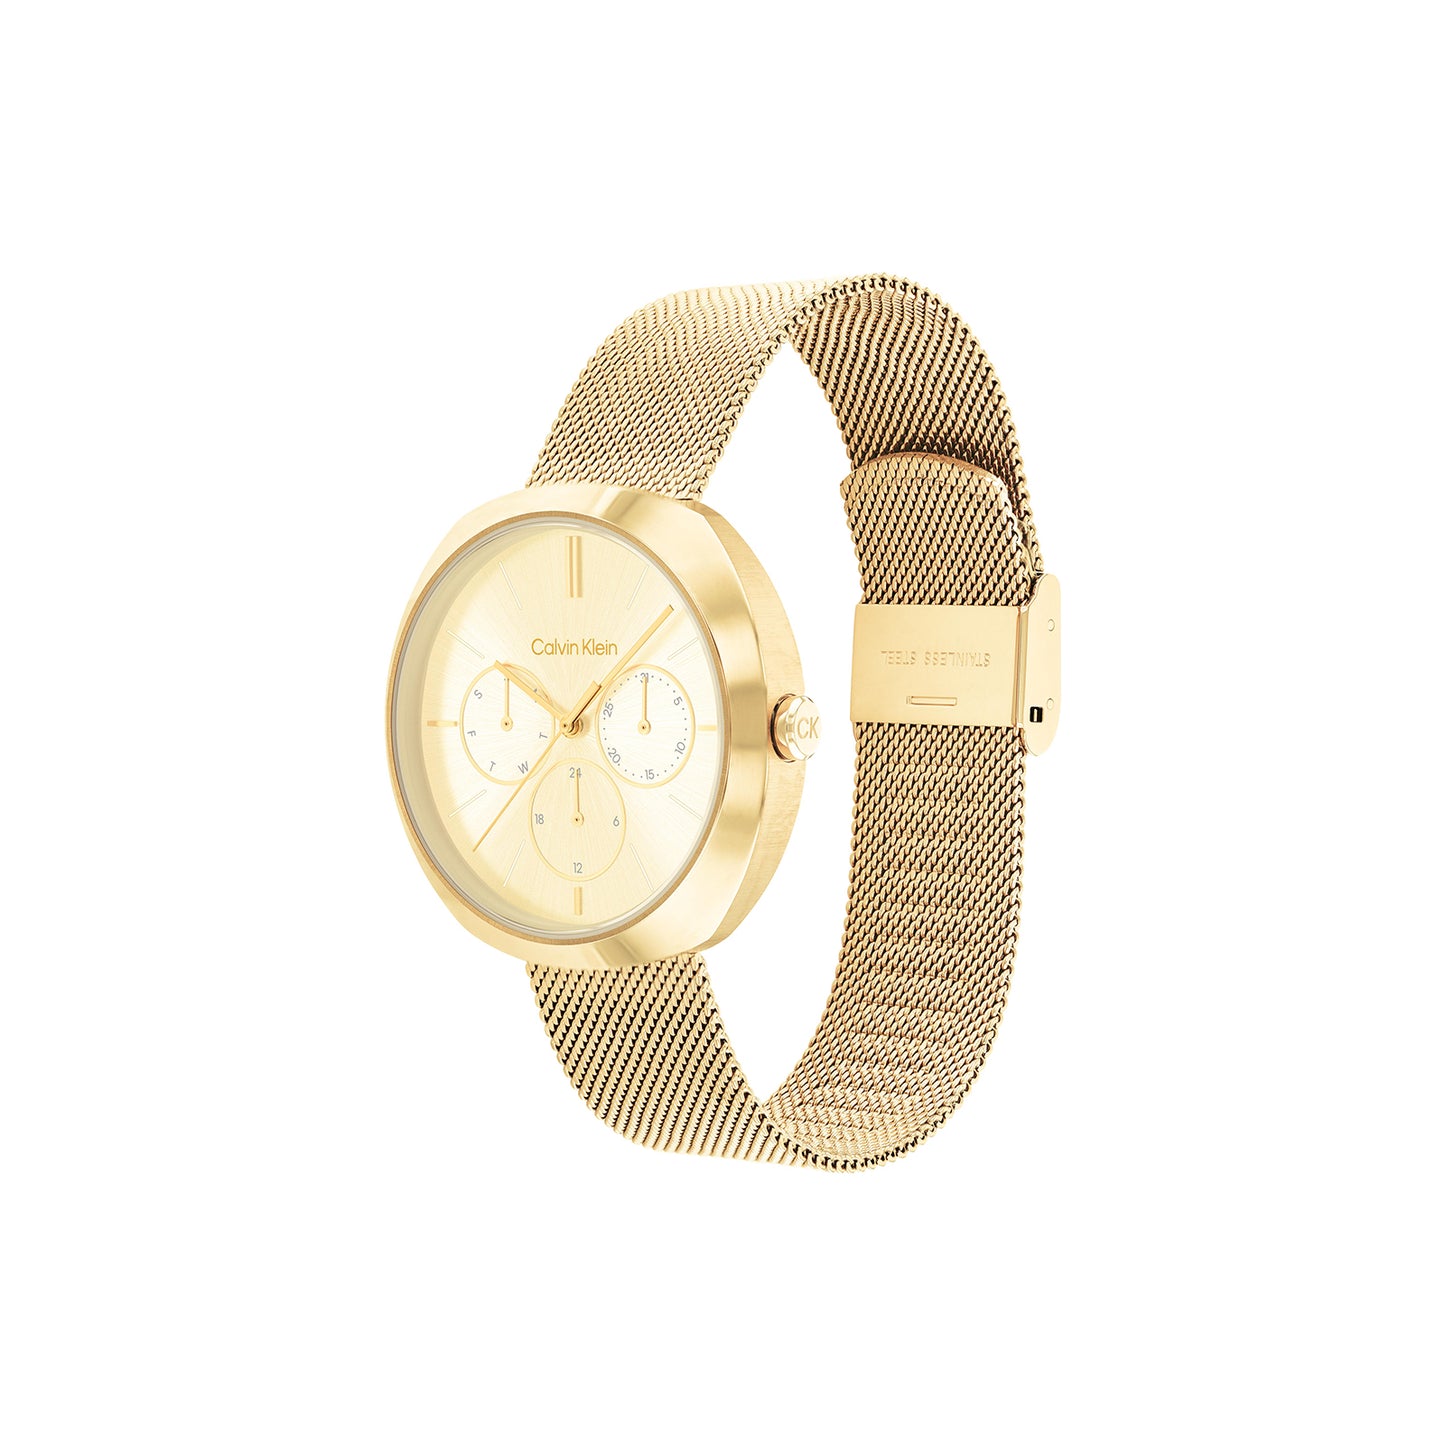 Calvin Klein 25200339 Women's Ionic Thin Gold Plated Steel Mesh Watch